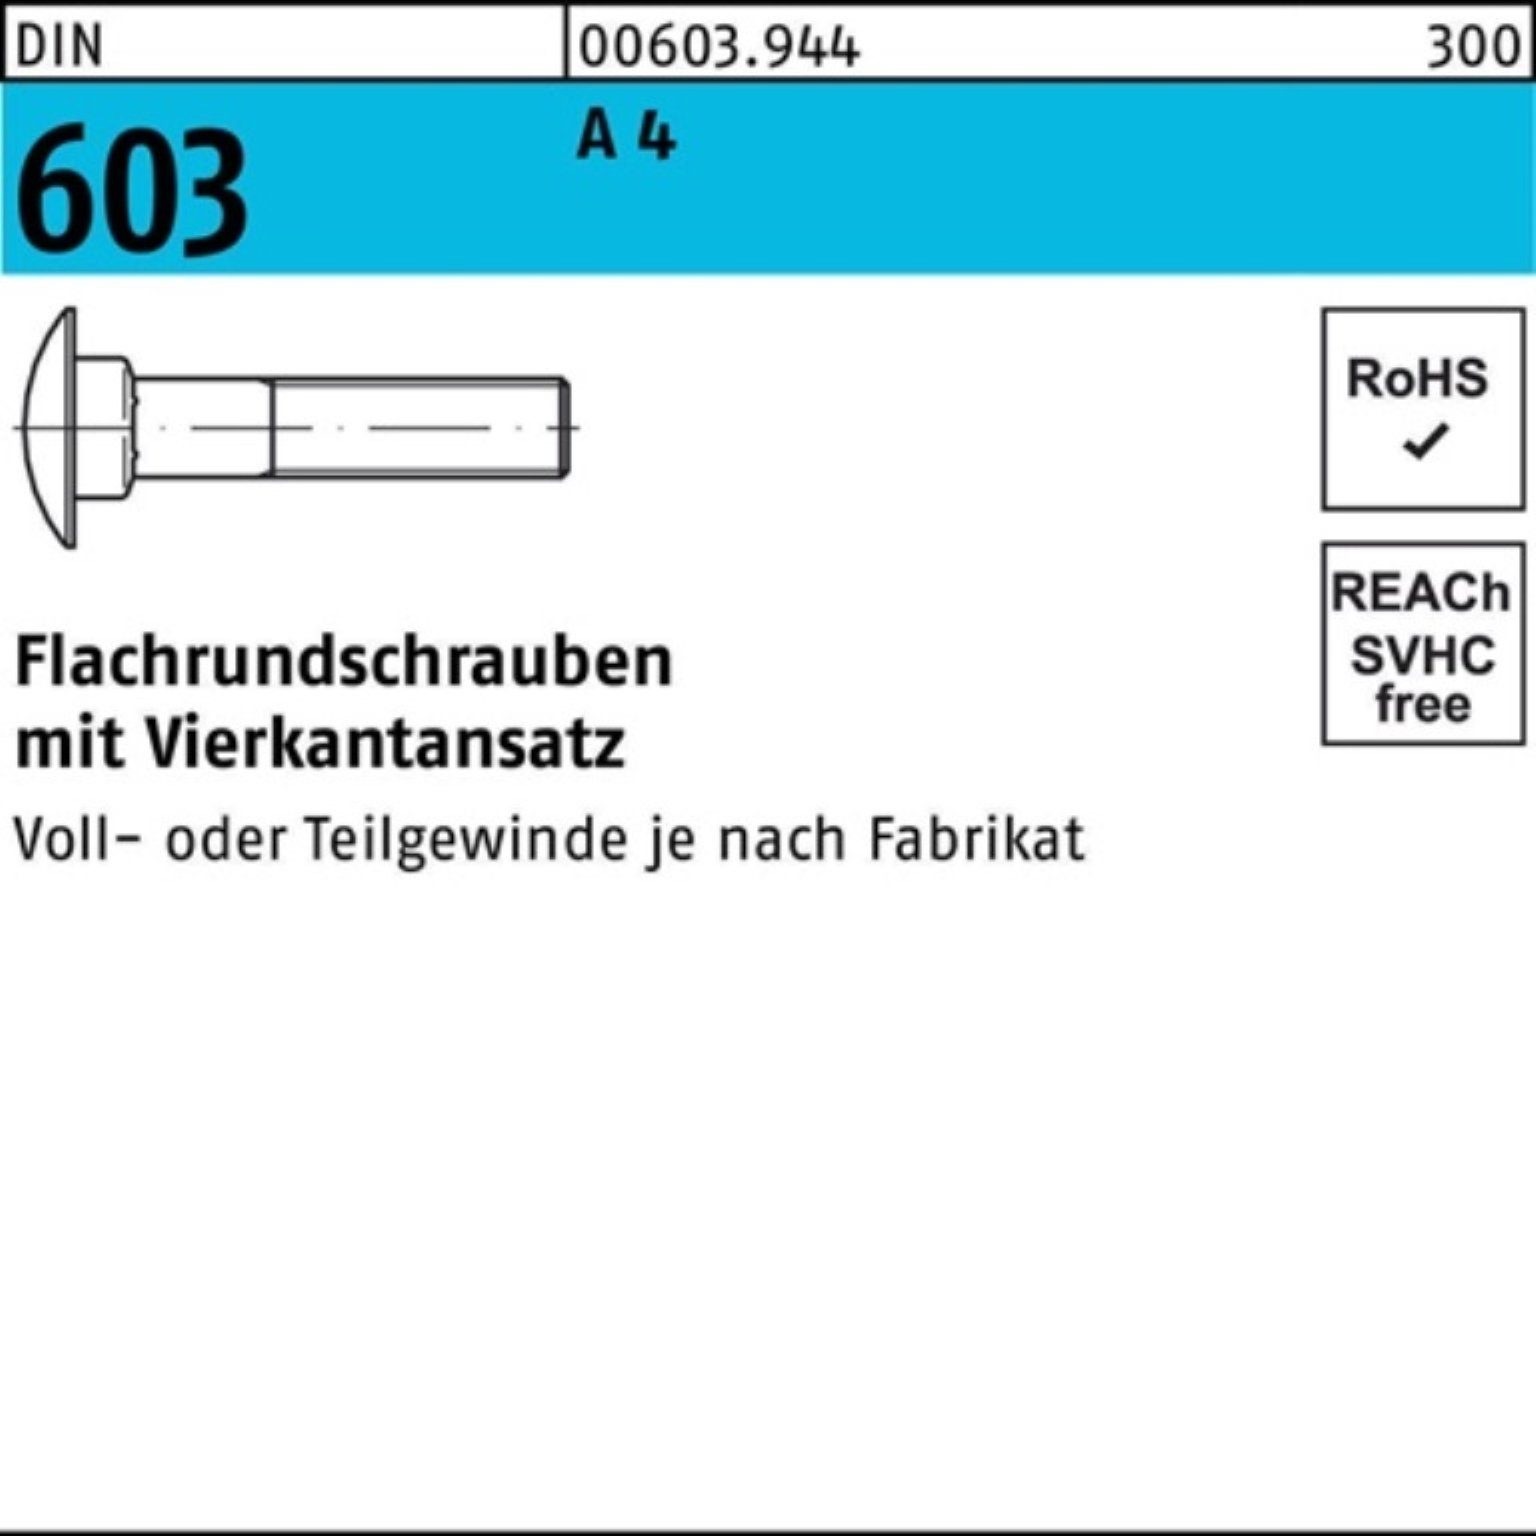 Reyher Schraube 100er Pack Flachrundschraube DIN 603 Vierkantansatz M10x 140 A 4 1 St